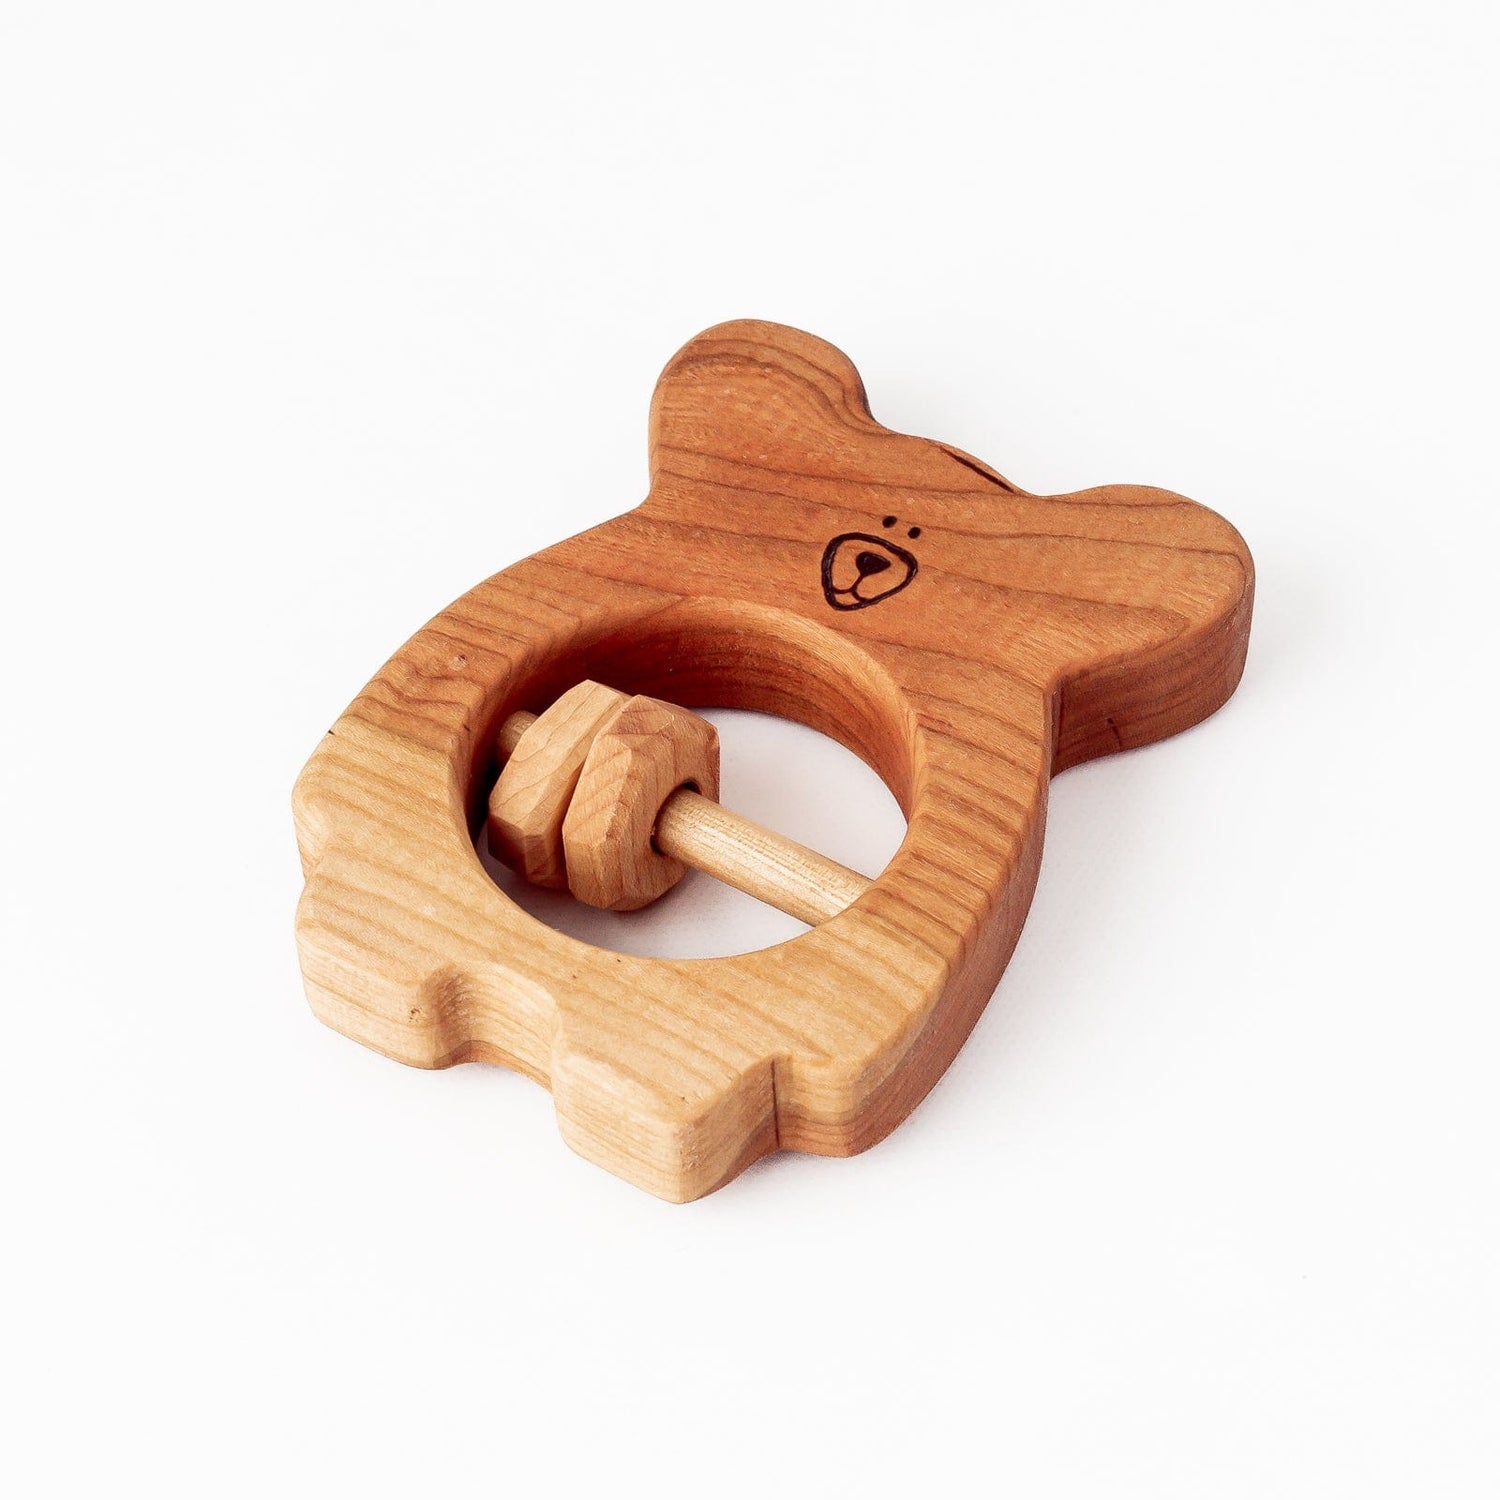 The Wooden Kind Teether Handmade Bear Rattle & Teething Toy